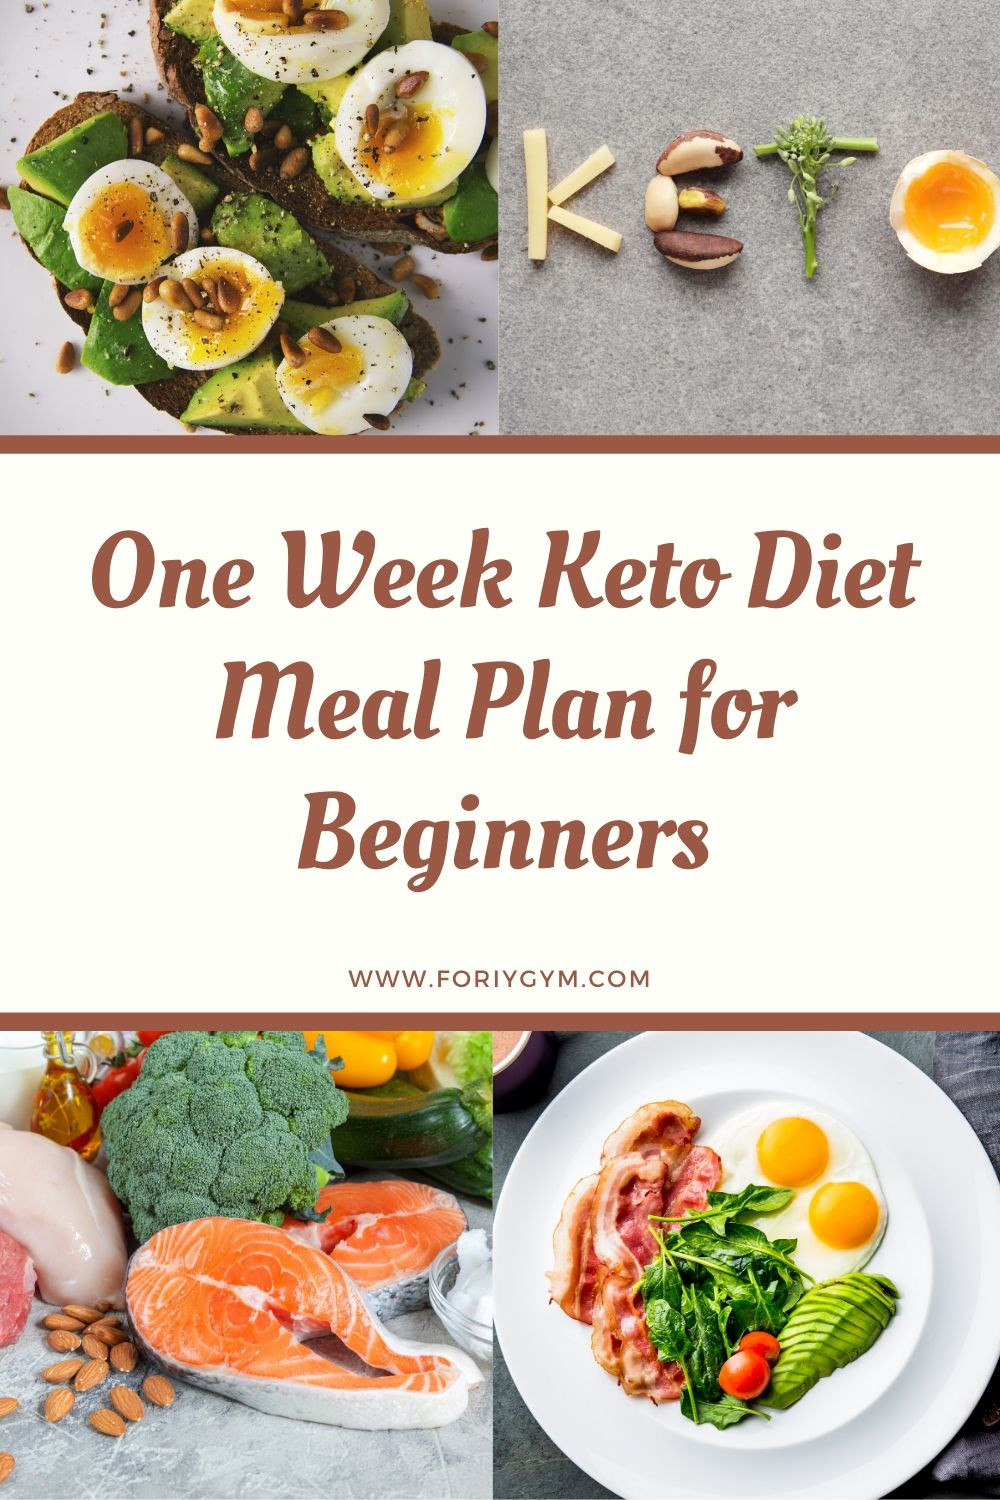 Keto For Beginners Week 1
 e Week Keto Diet Meal Plan for Beginners ForiyGym